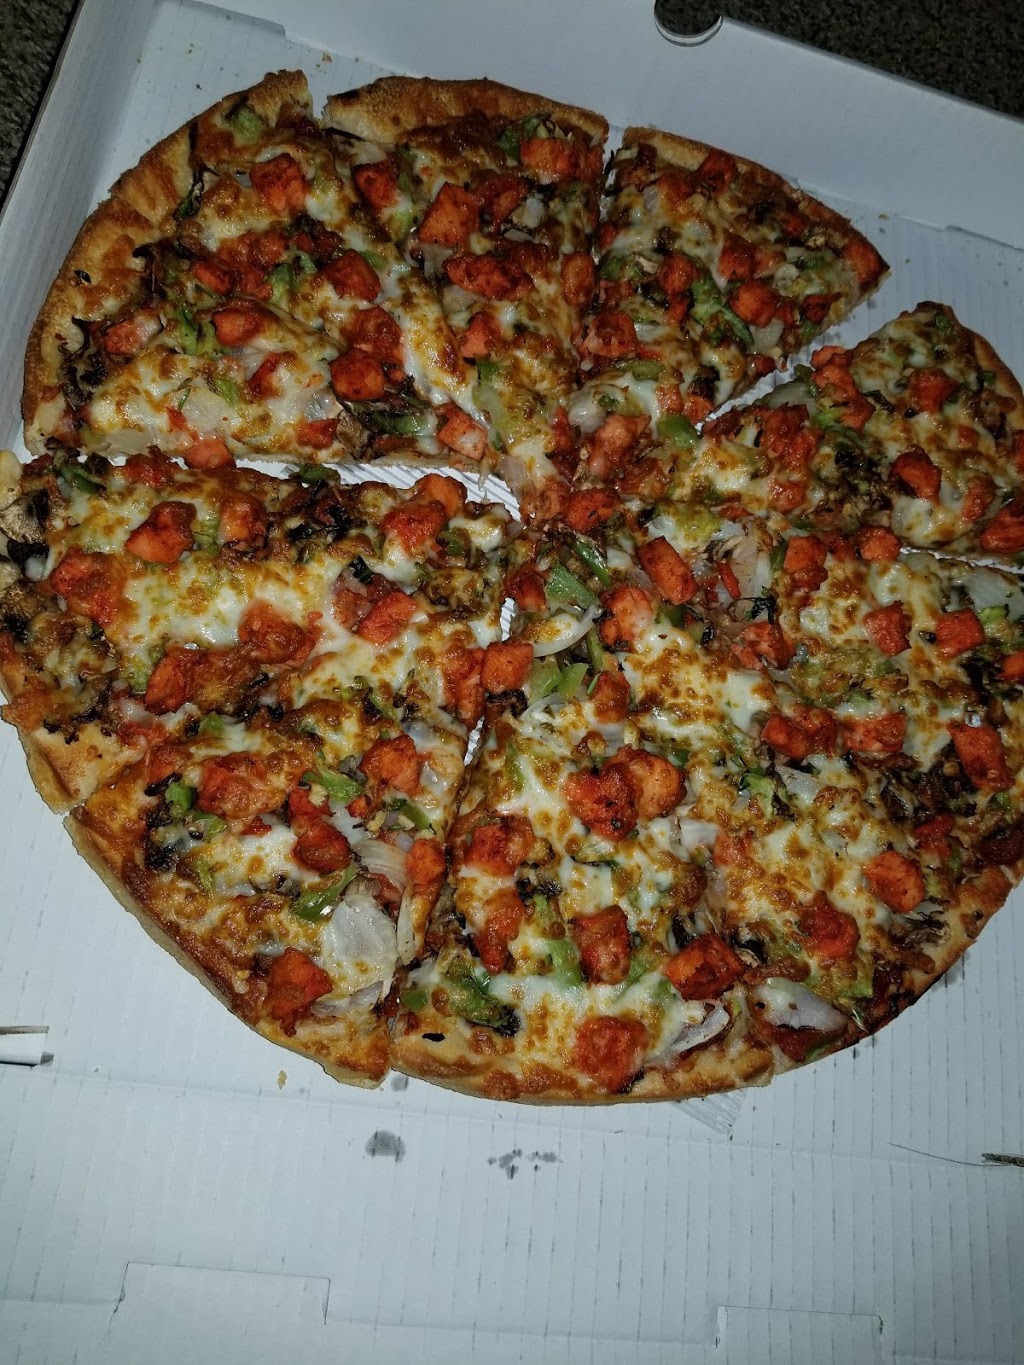 Supreme Pizza | 3304 64 St NE, Calgary, AB T1Y 4L4, Canada | Phone: (403) 285-9412